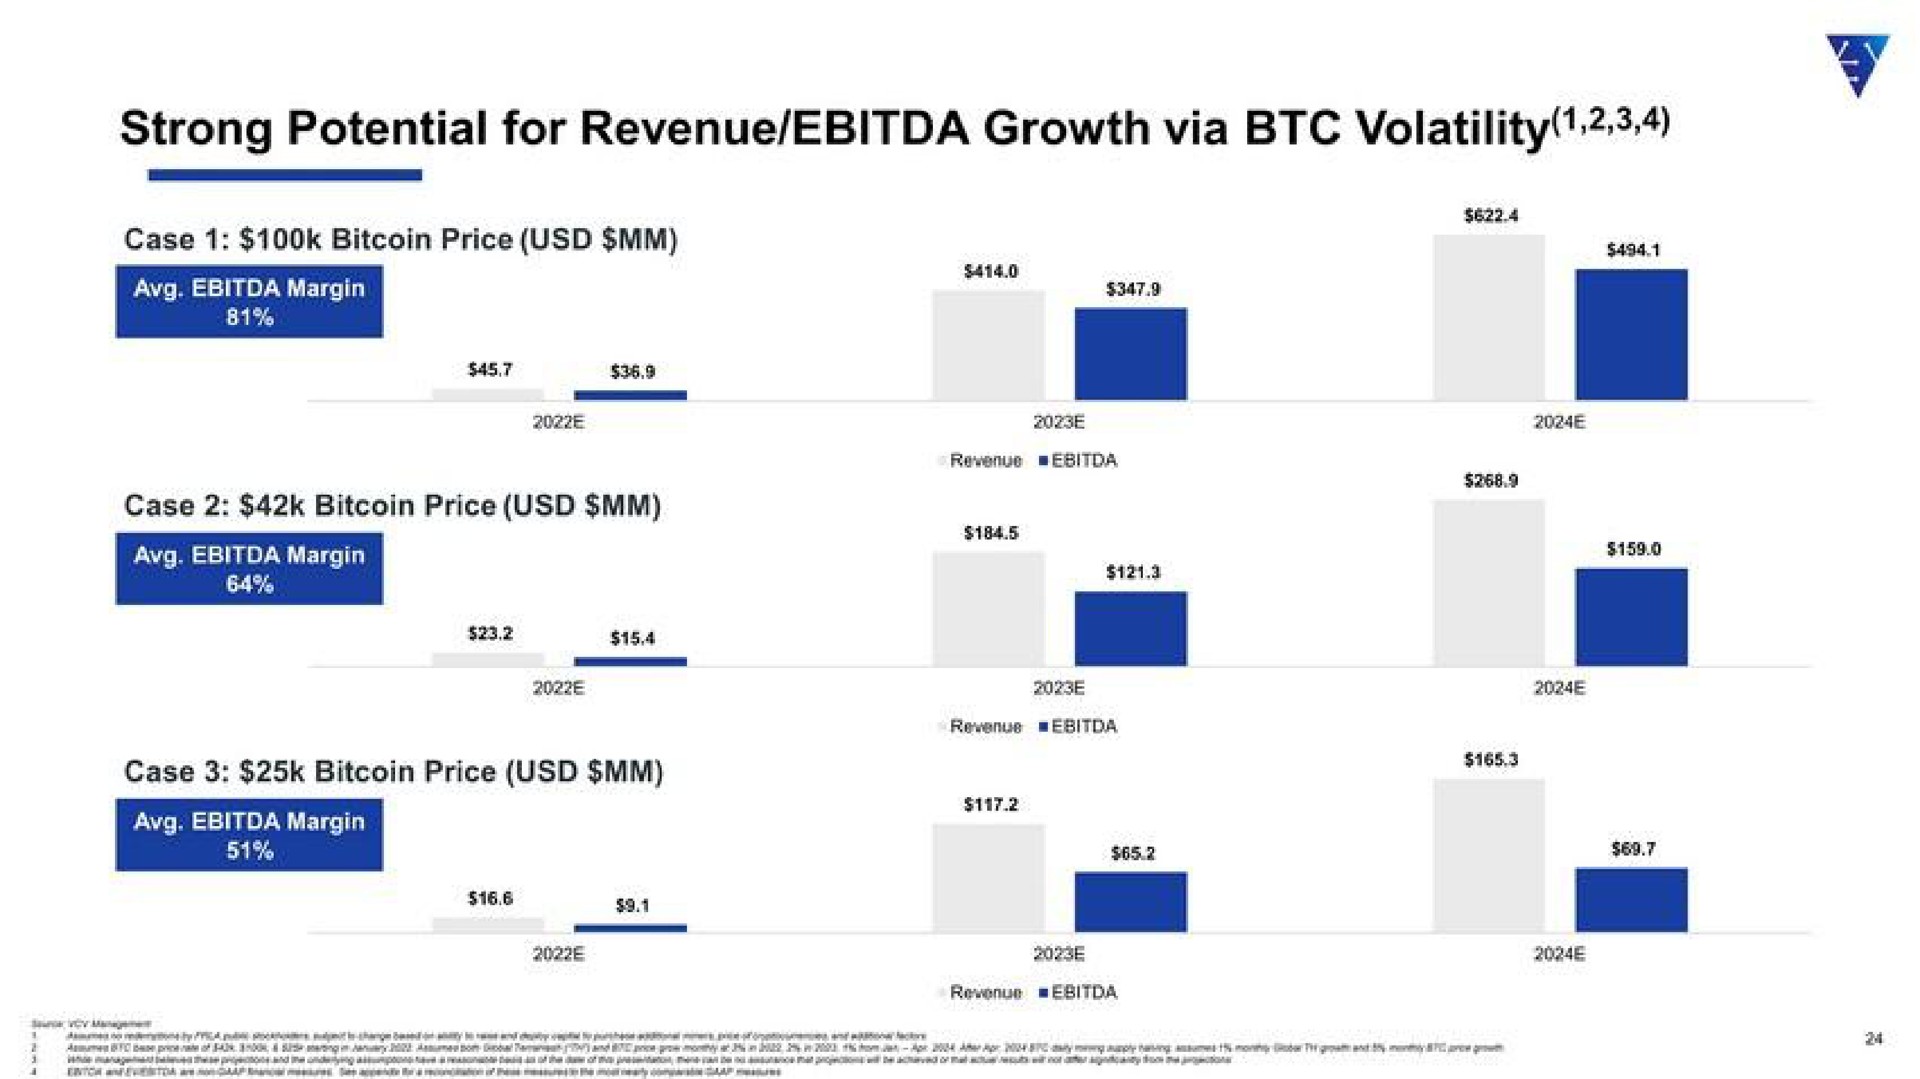 strong potential for revenue growth via volatility | VCV Digital Technology